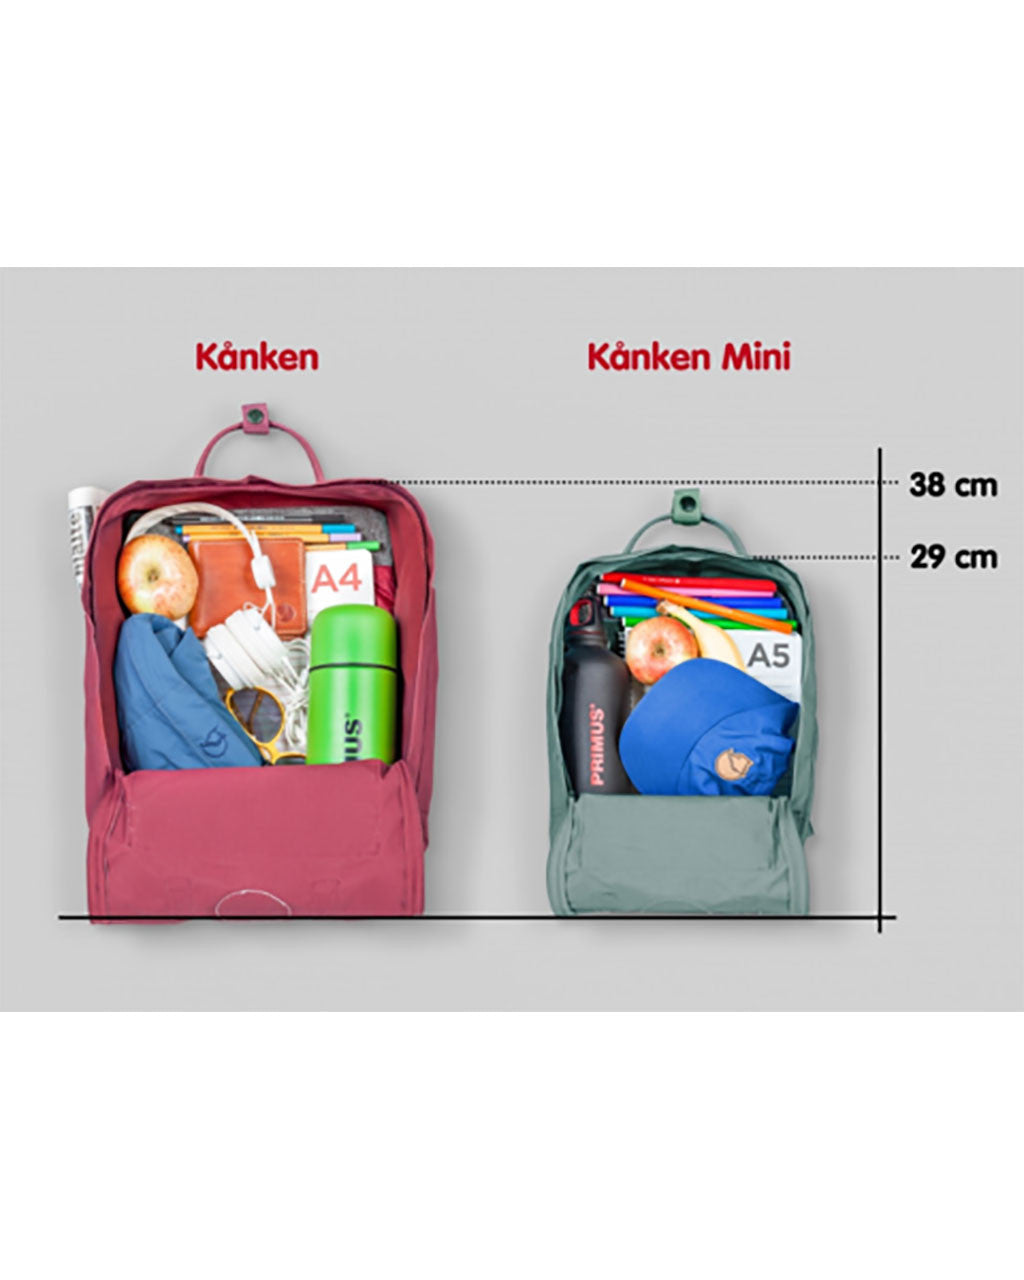 Fjallraven Kanken Mini Backpack: Iconic Design Meets Functional ...